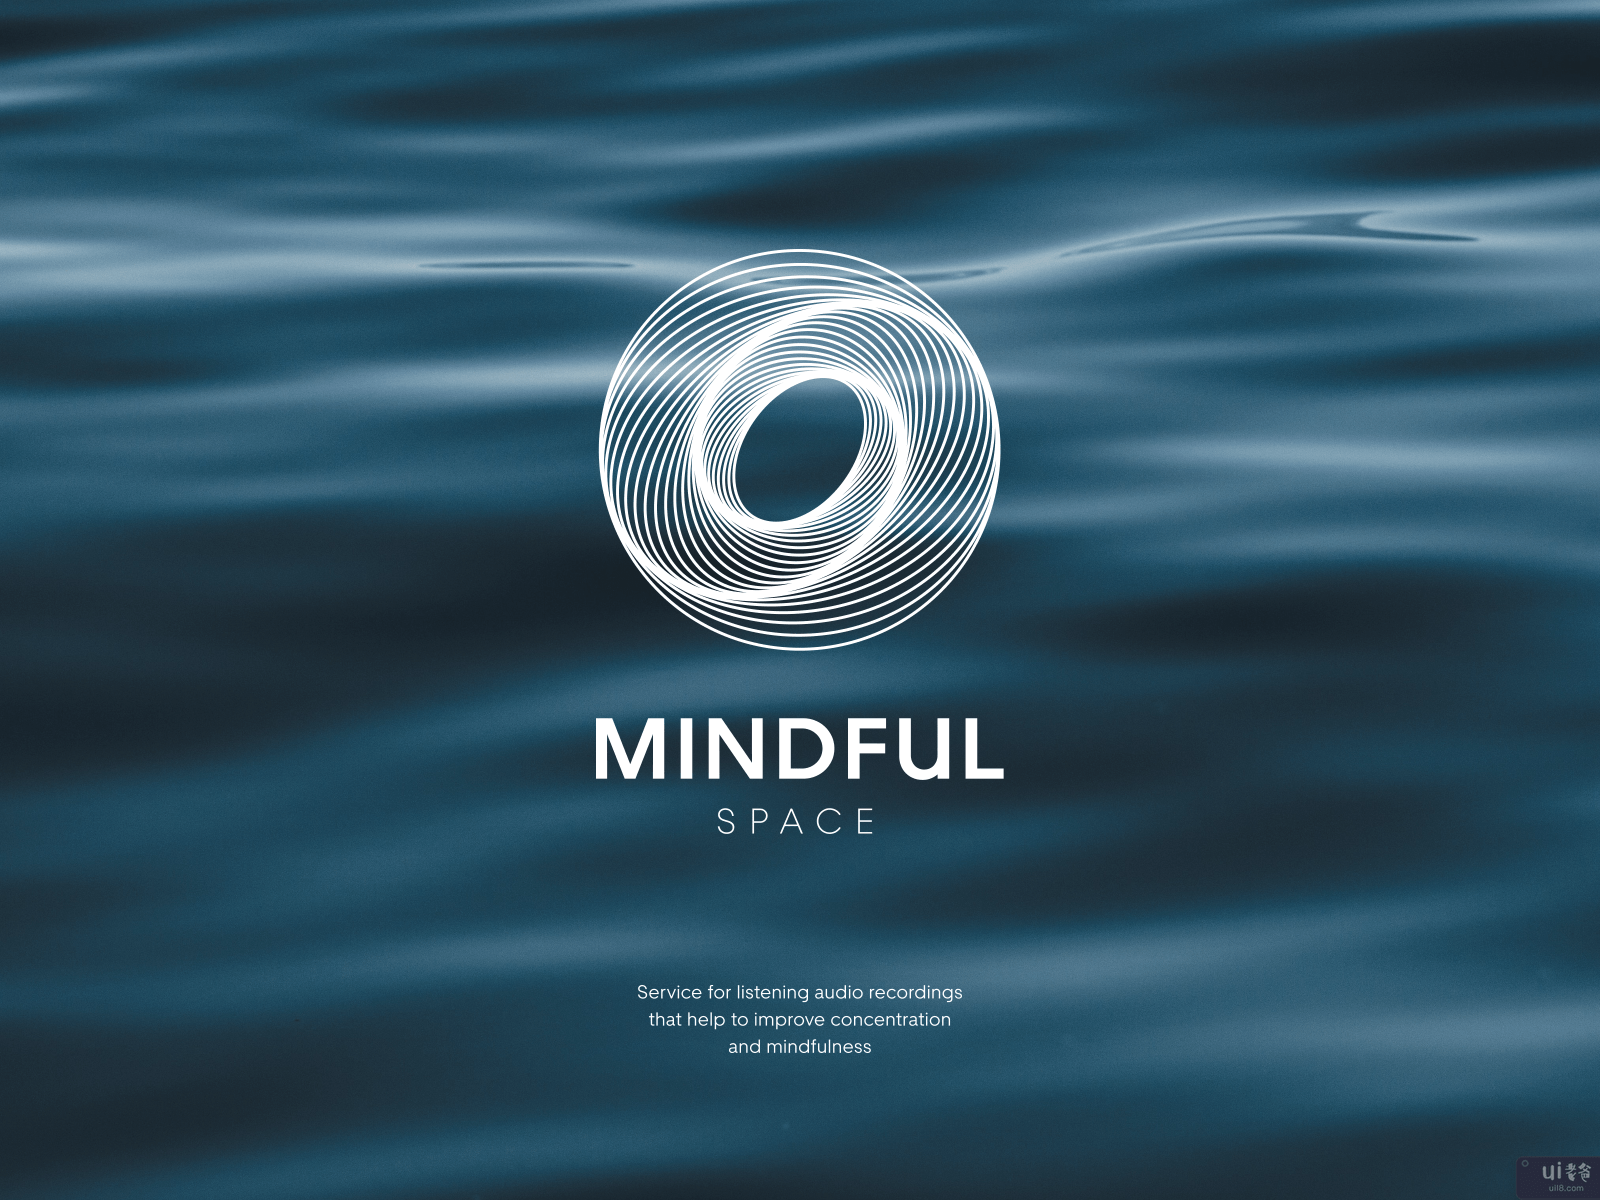 心灵空间 - 为冥想服务的品牌建设。(Mindful Space - Branding for service for meditation.)插图2